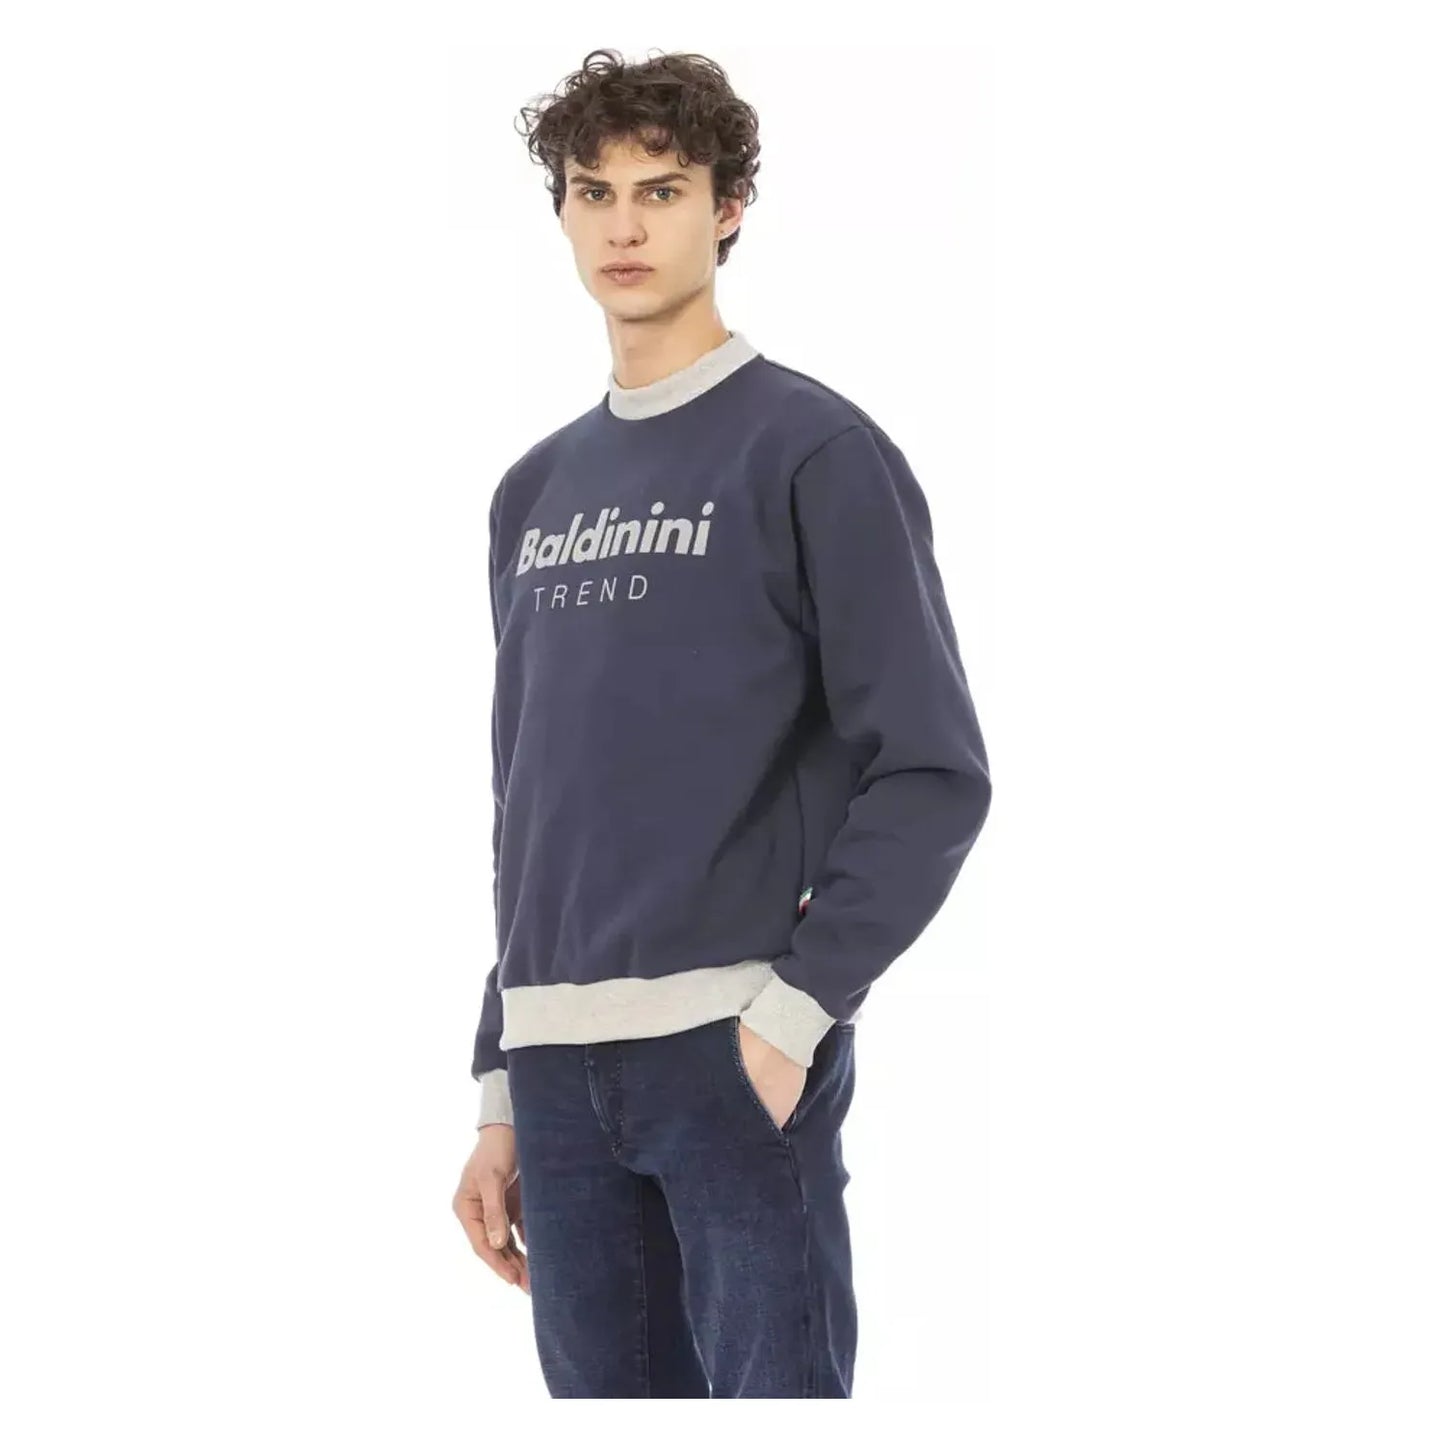 Baldinini Trend Elegant Blue Long Sleeve Sweatshirt blue-cotton-sweater-116